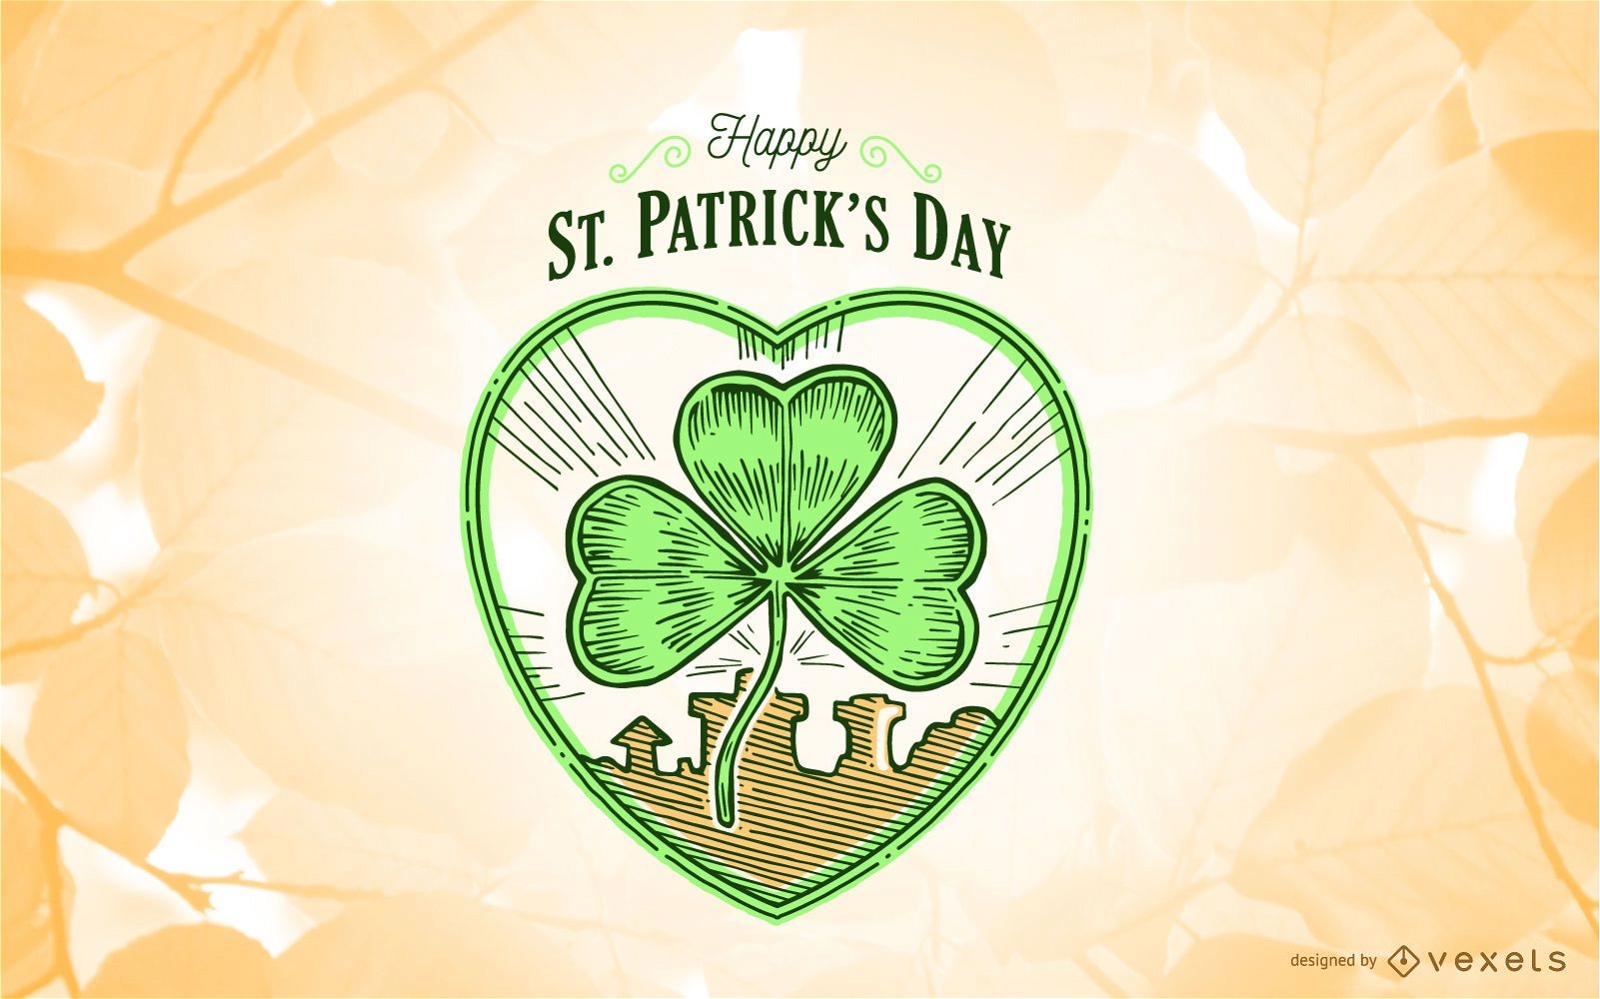 Happy St Patrick's Day badge design